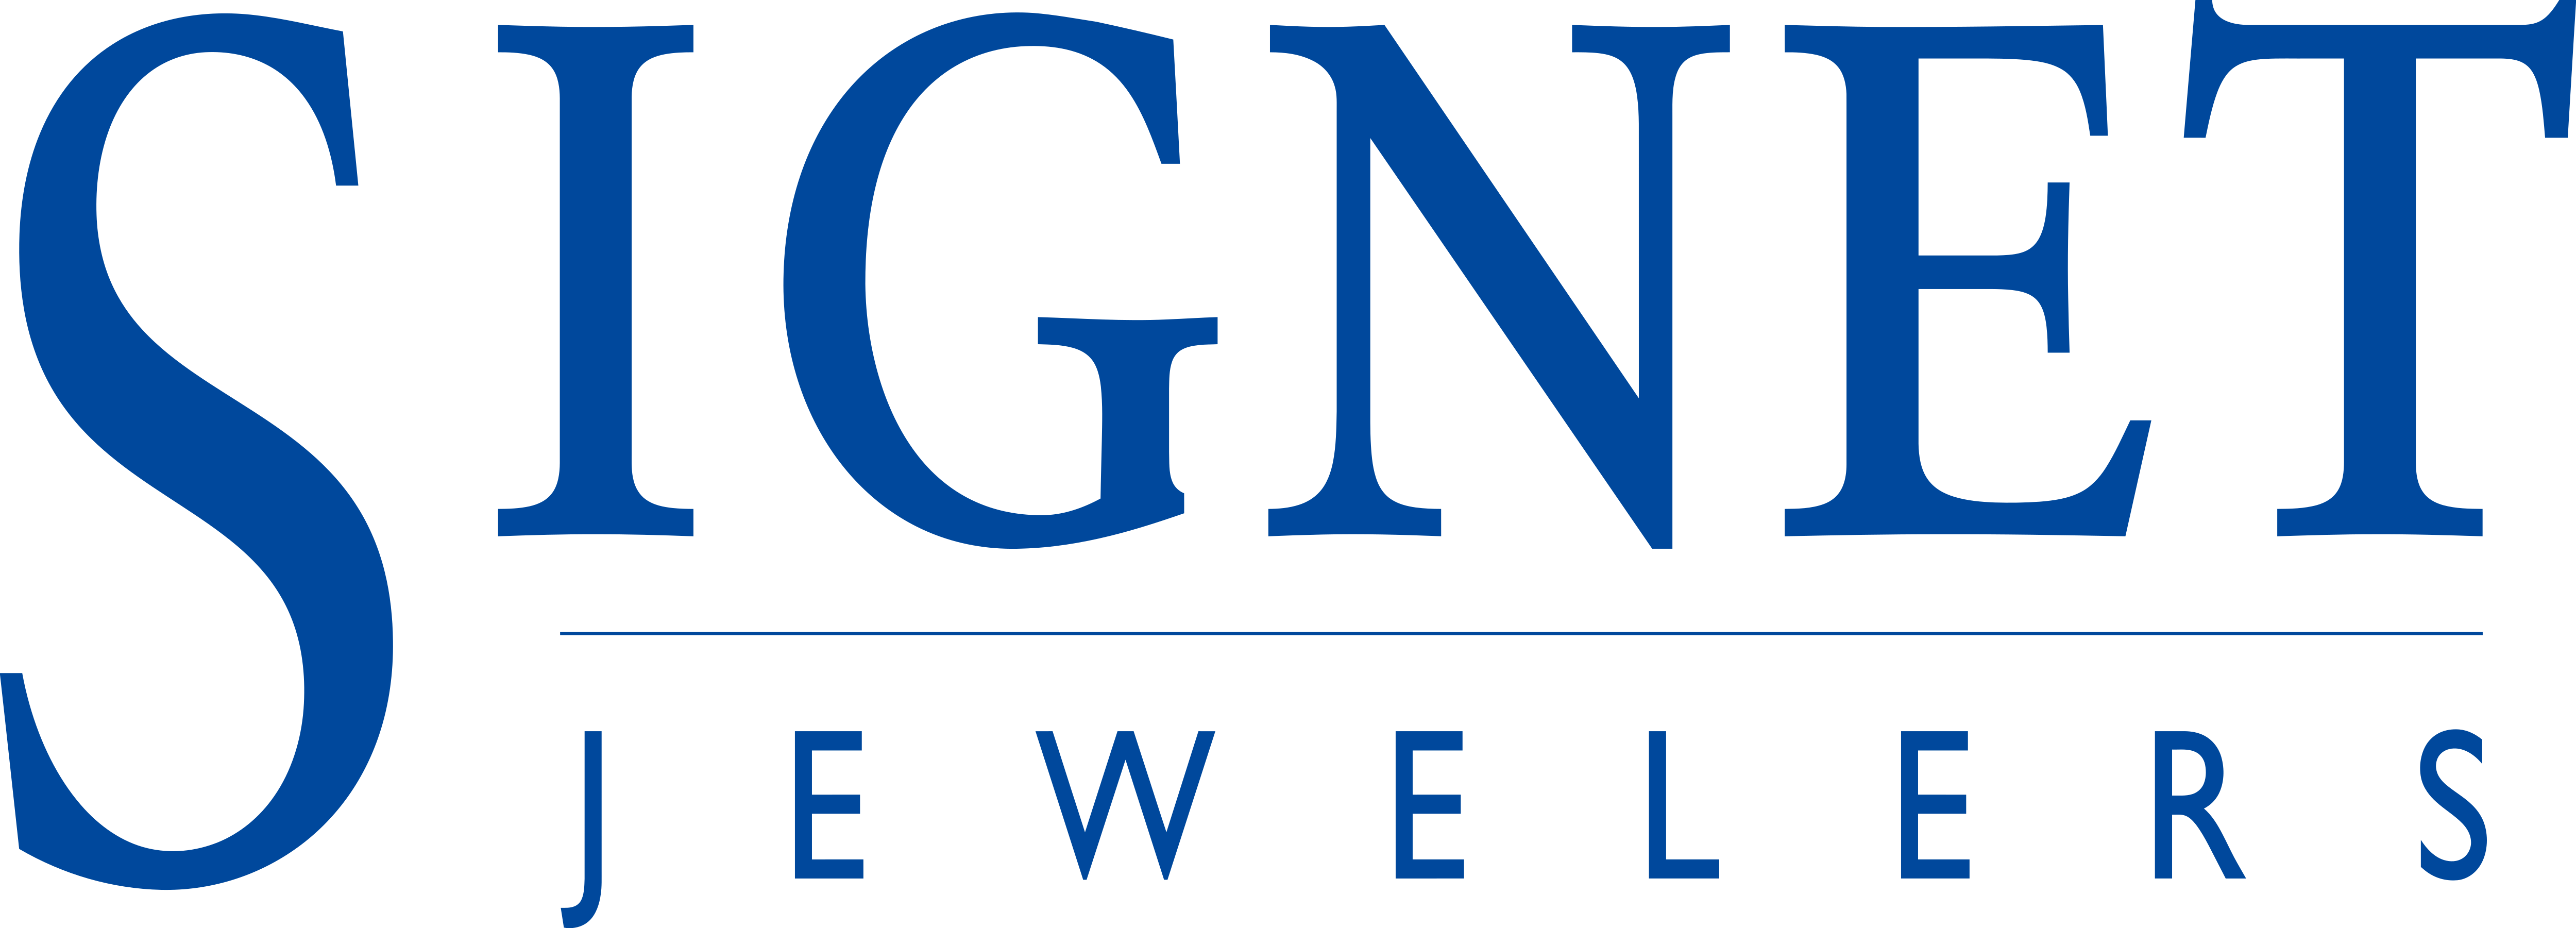 Signet Jewelers Logo 